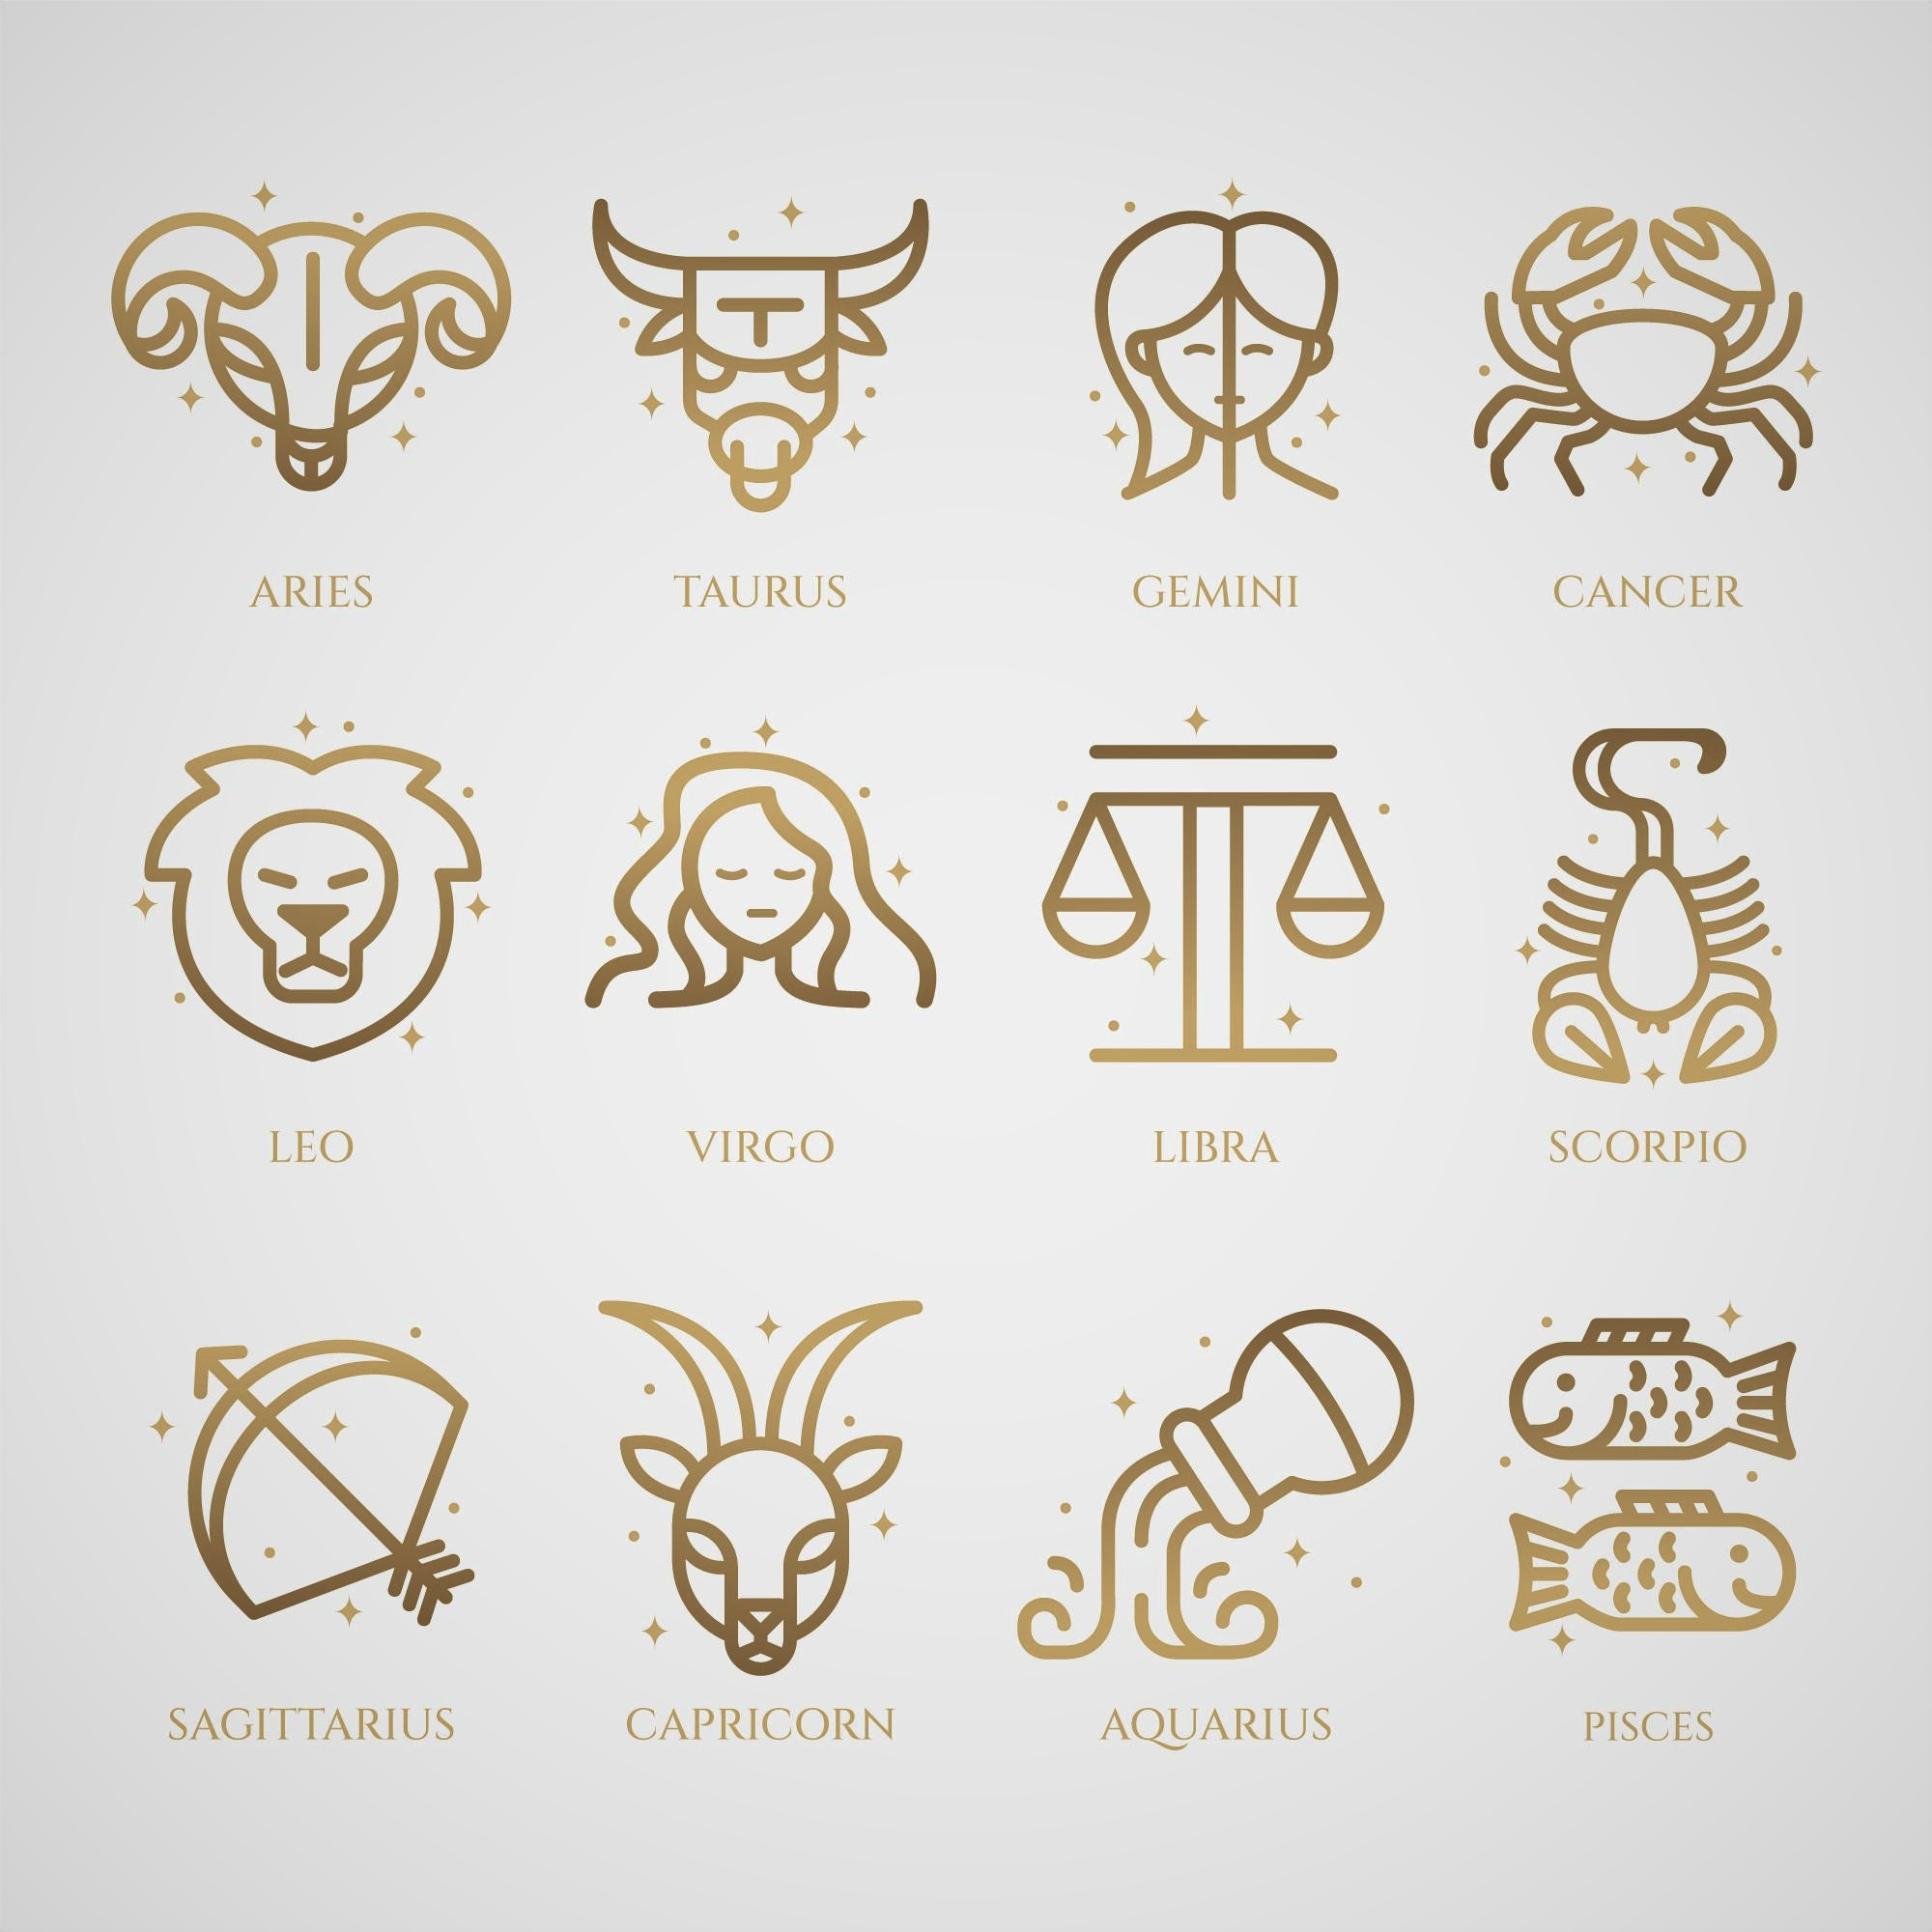 12 zodiac signs of birth, month of birth & symbols